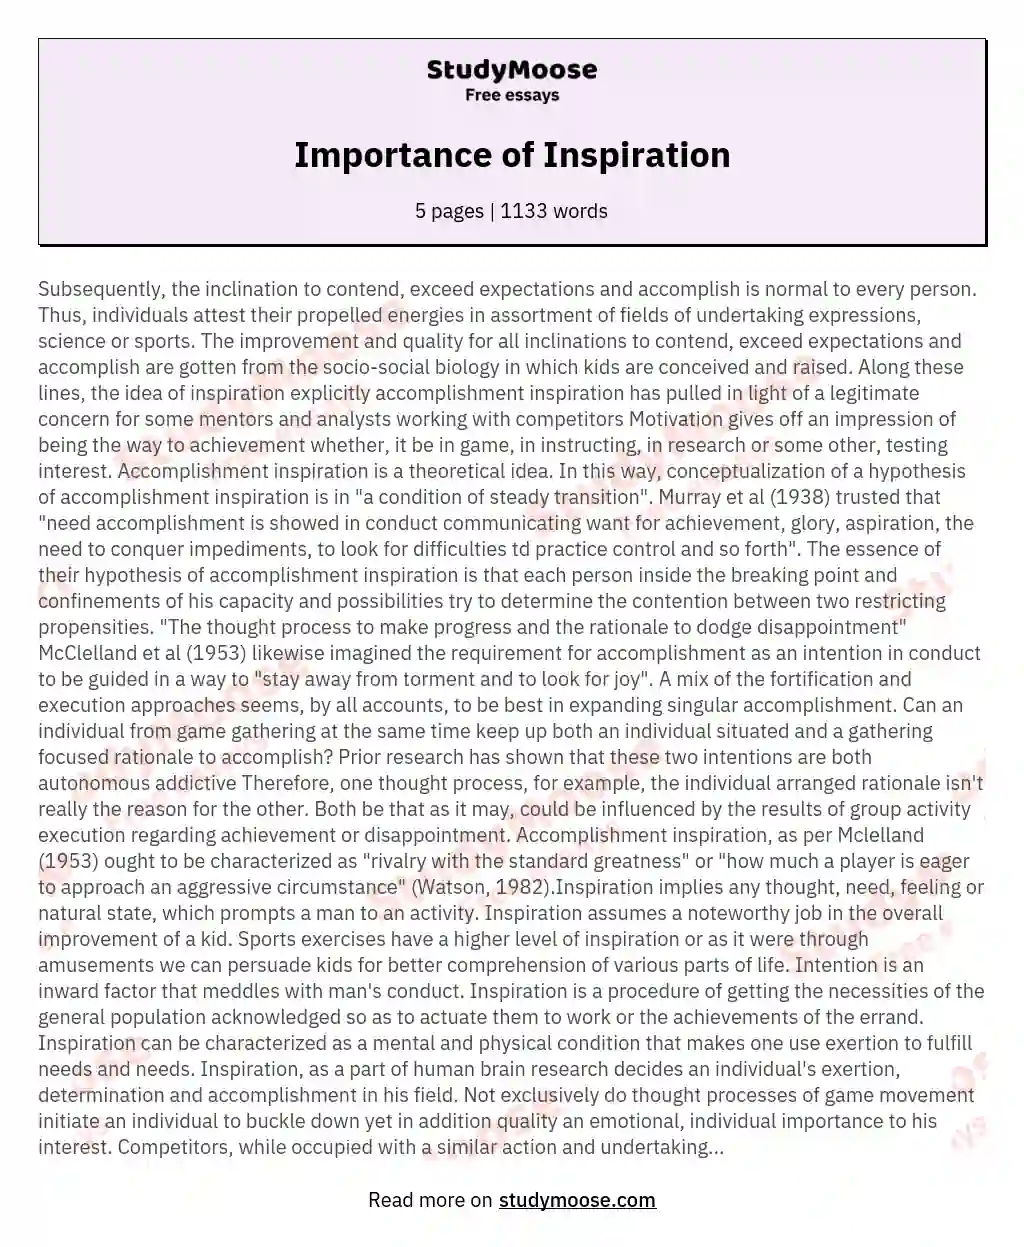 Importance of Inspiration essay